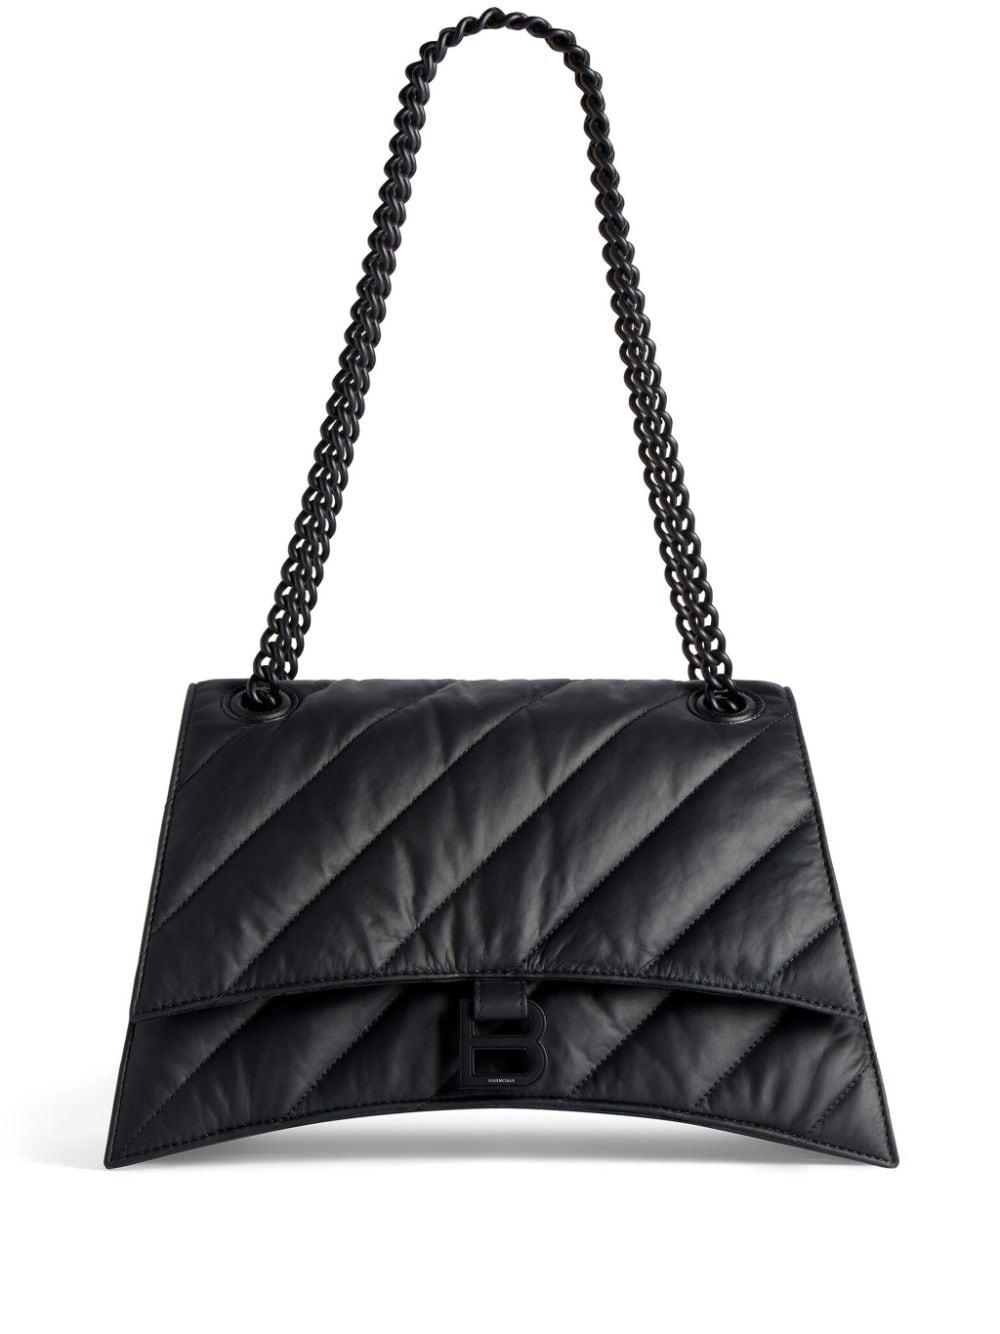 Balenciaga Medium Crush Chain-strap Quilted Shoulder Bag in Black | Lyst